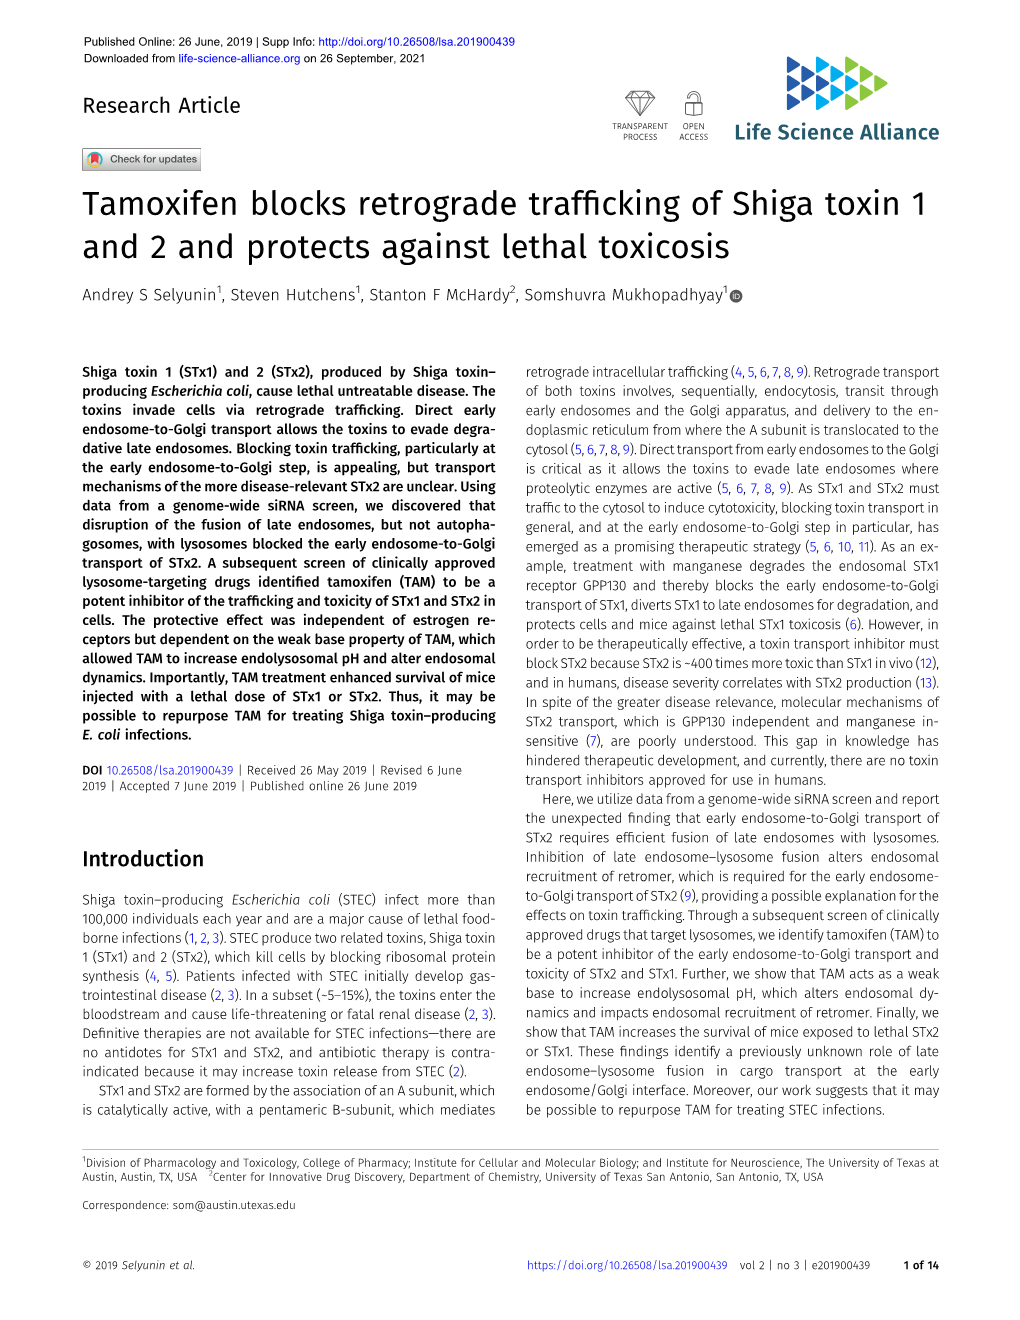 Tamoxifen Blocks Retrograde Trafficking of Shiga Toxin 1 and 2